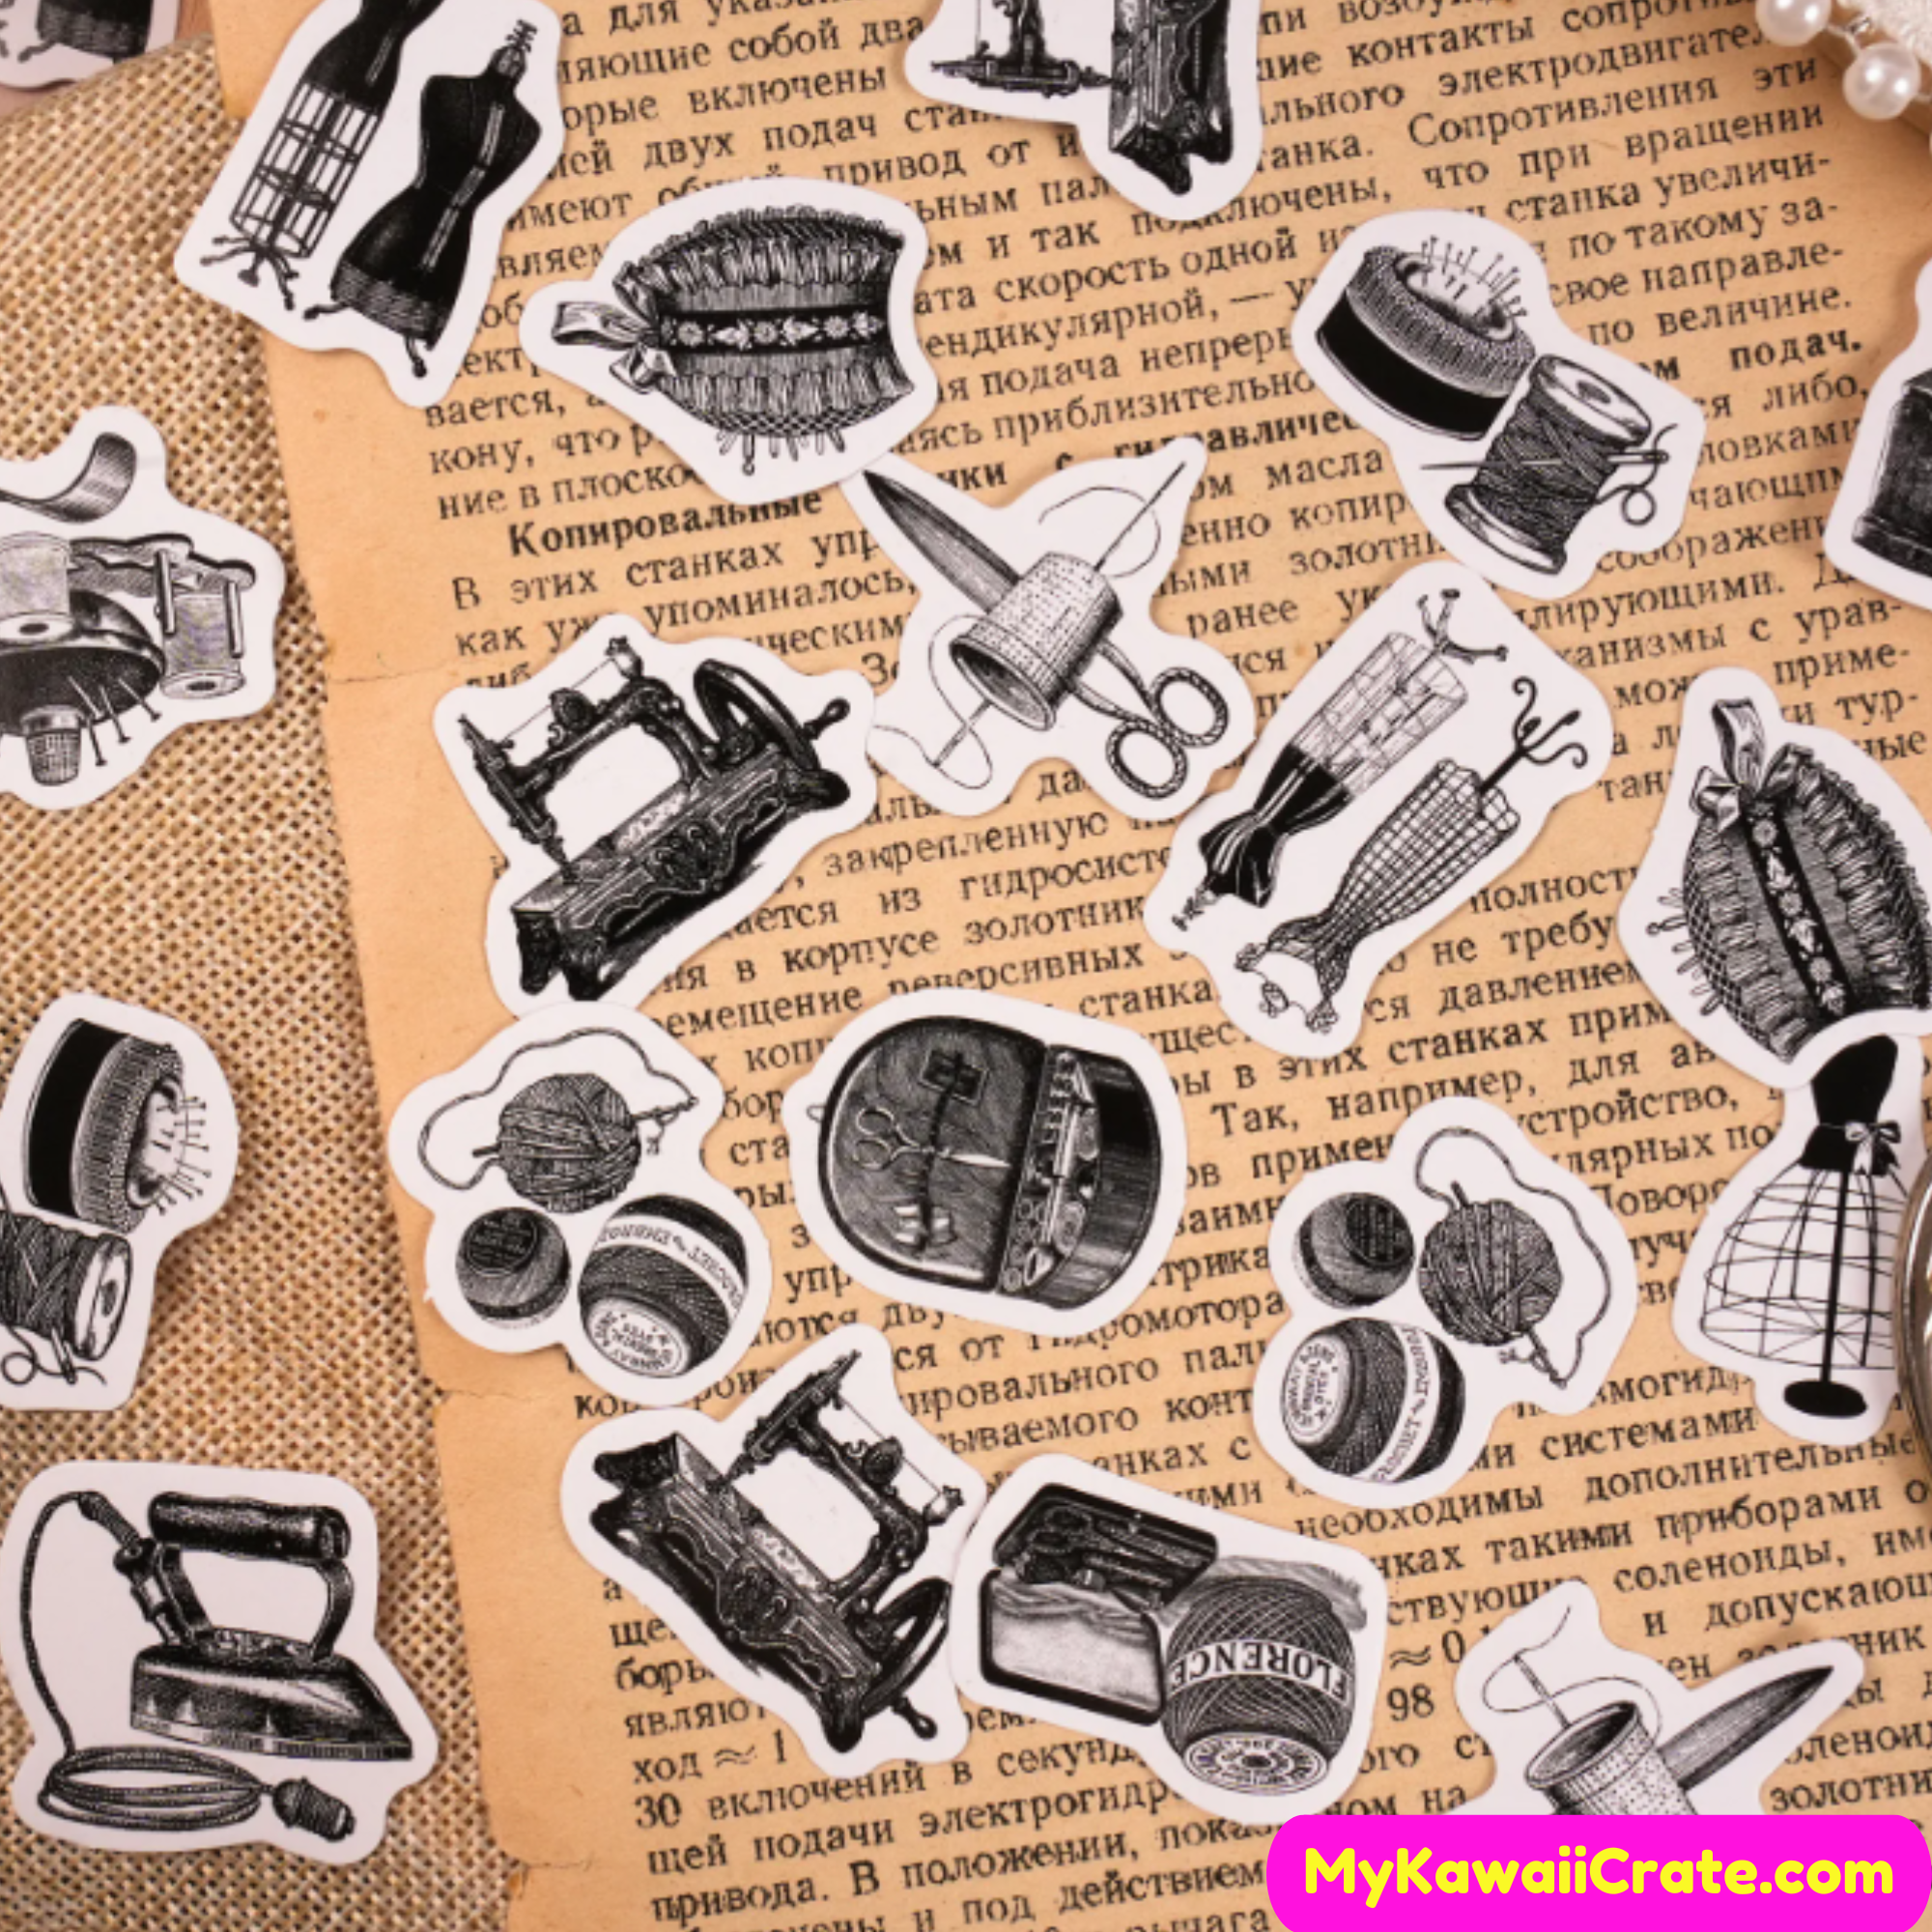 Black Kawaii Cute Scrapbook Journal Stickers Japanese Style Diary Craft Art  46pc